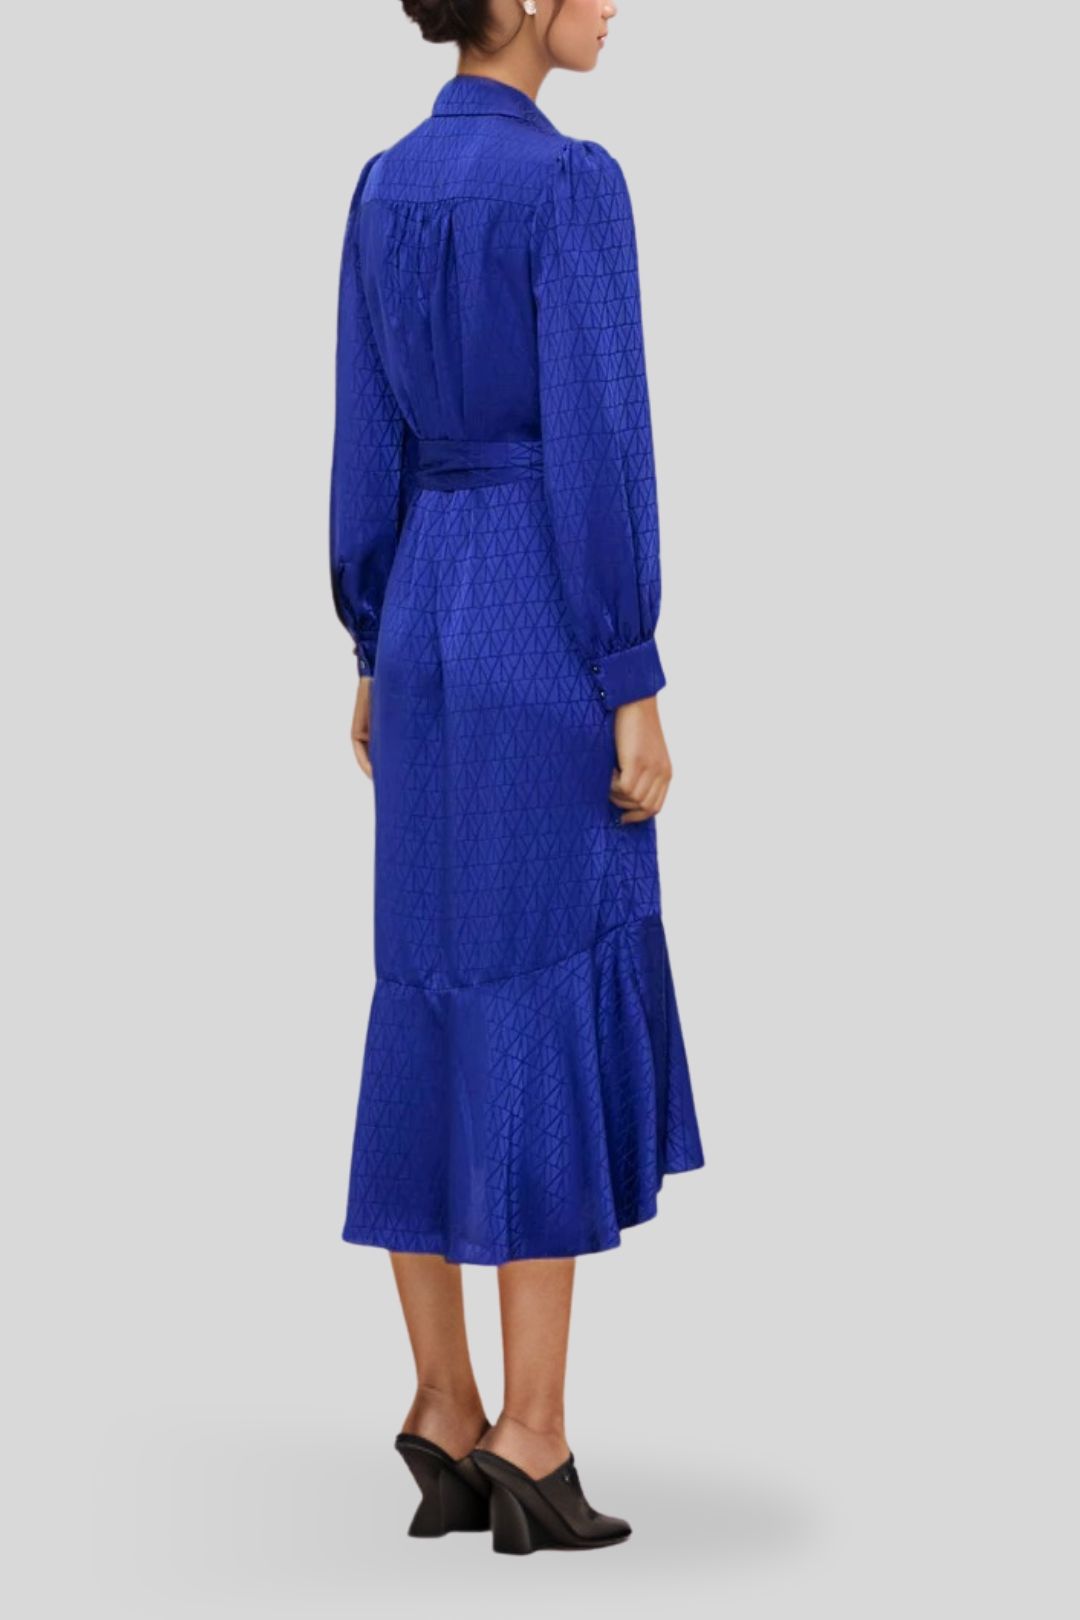 Veronika Maine Monogram Jacquard Midi Dress in Blue Jewel